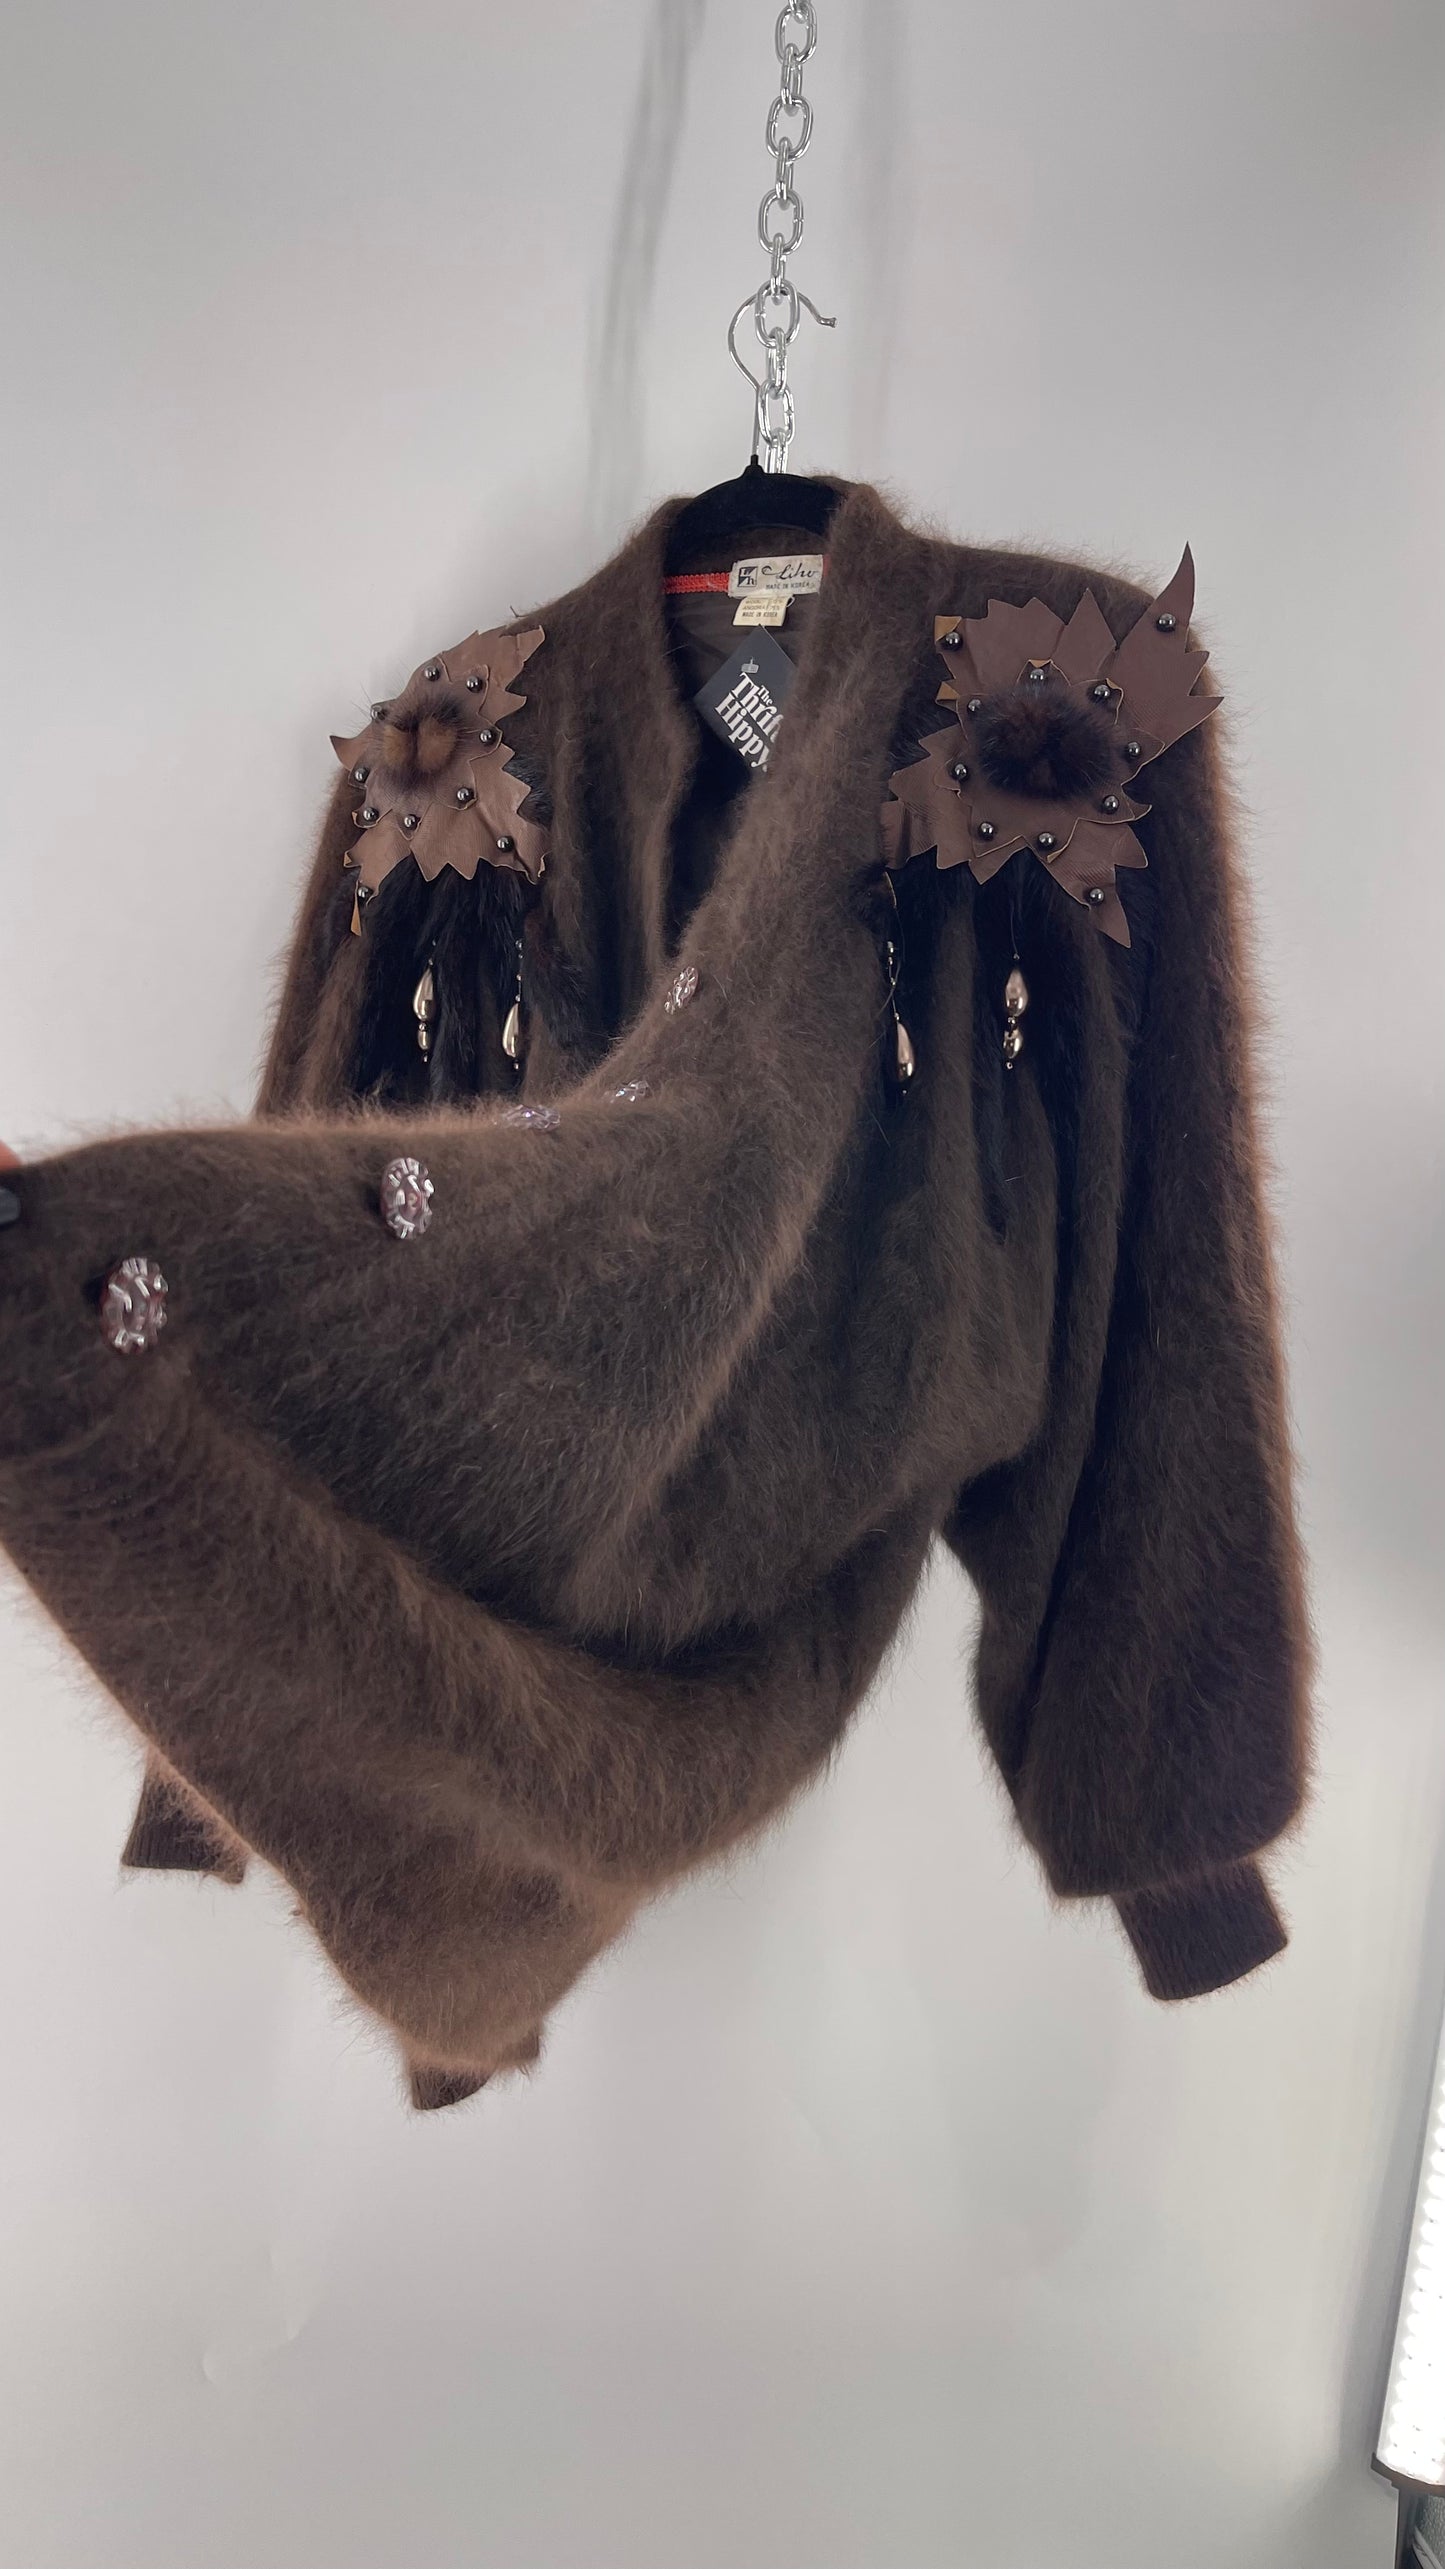 Liho Korean Vintage Brown Cardigan with Leather, Fur and Beaded Detailing 15% Wool 75% Angora  (C)(Medium)